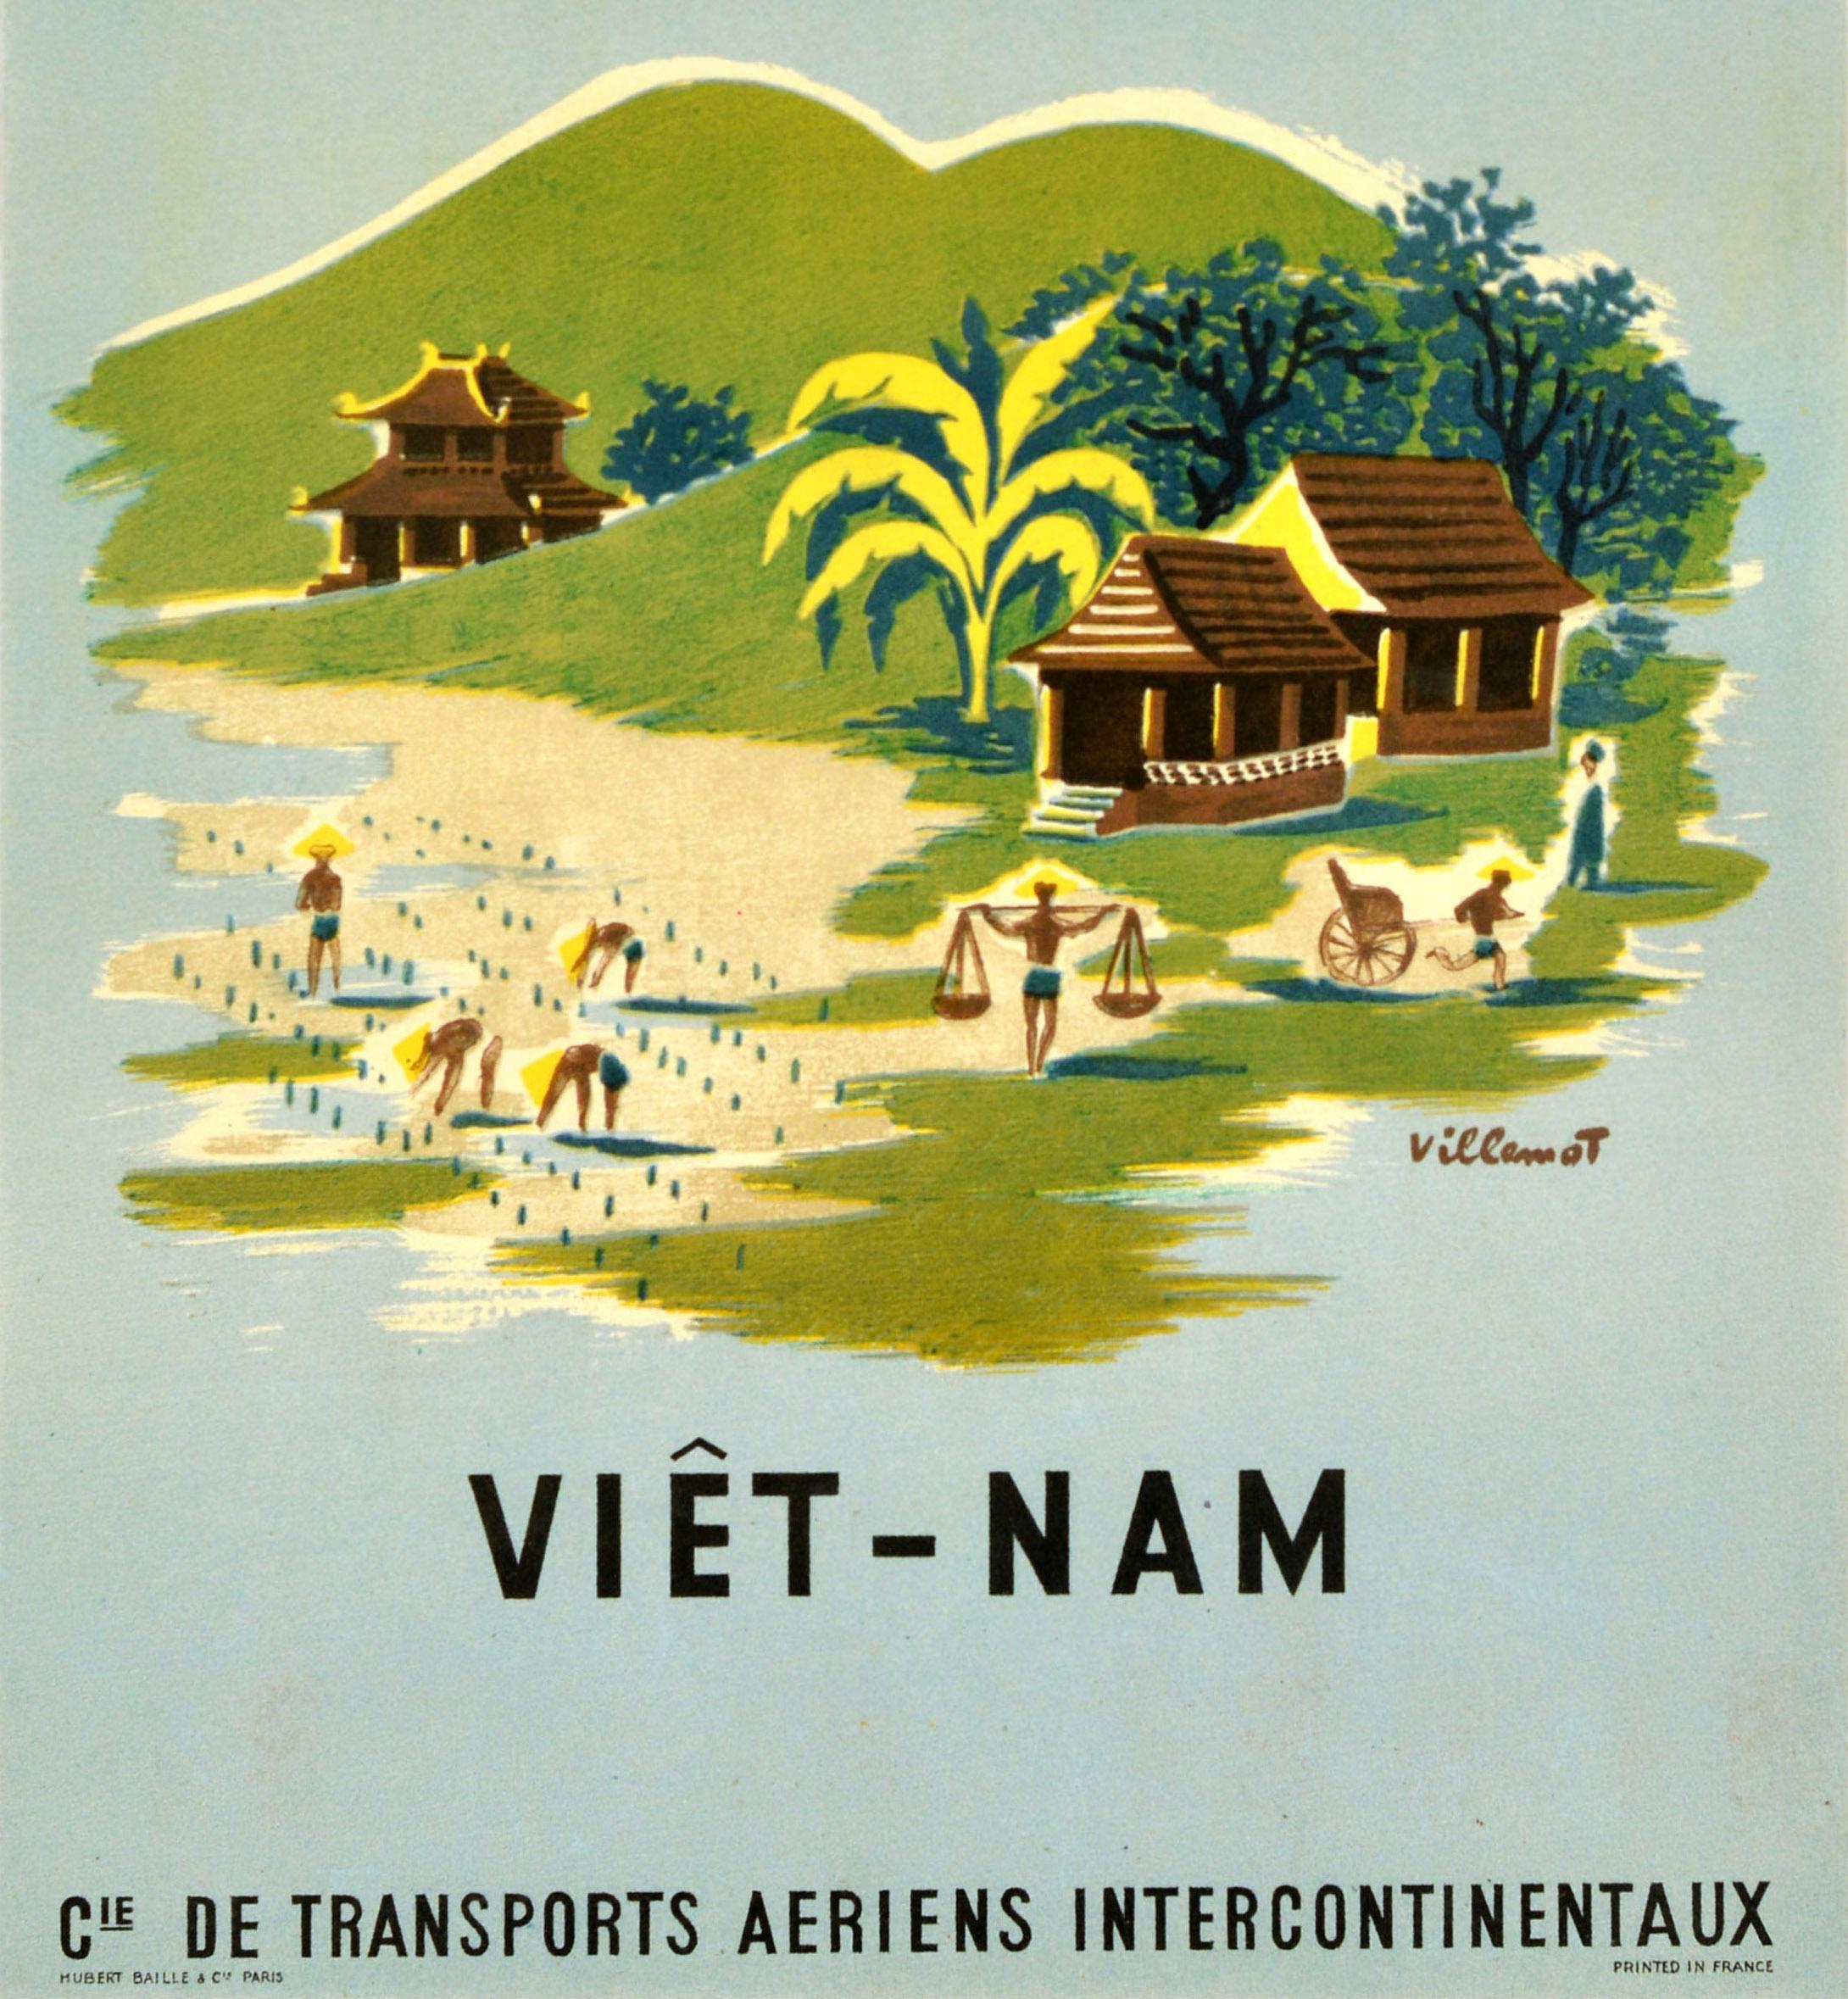 French Original Vintage Travel Poster TAI Airline Vietnam Asia Villemot Midcentury Art